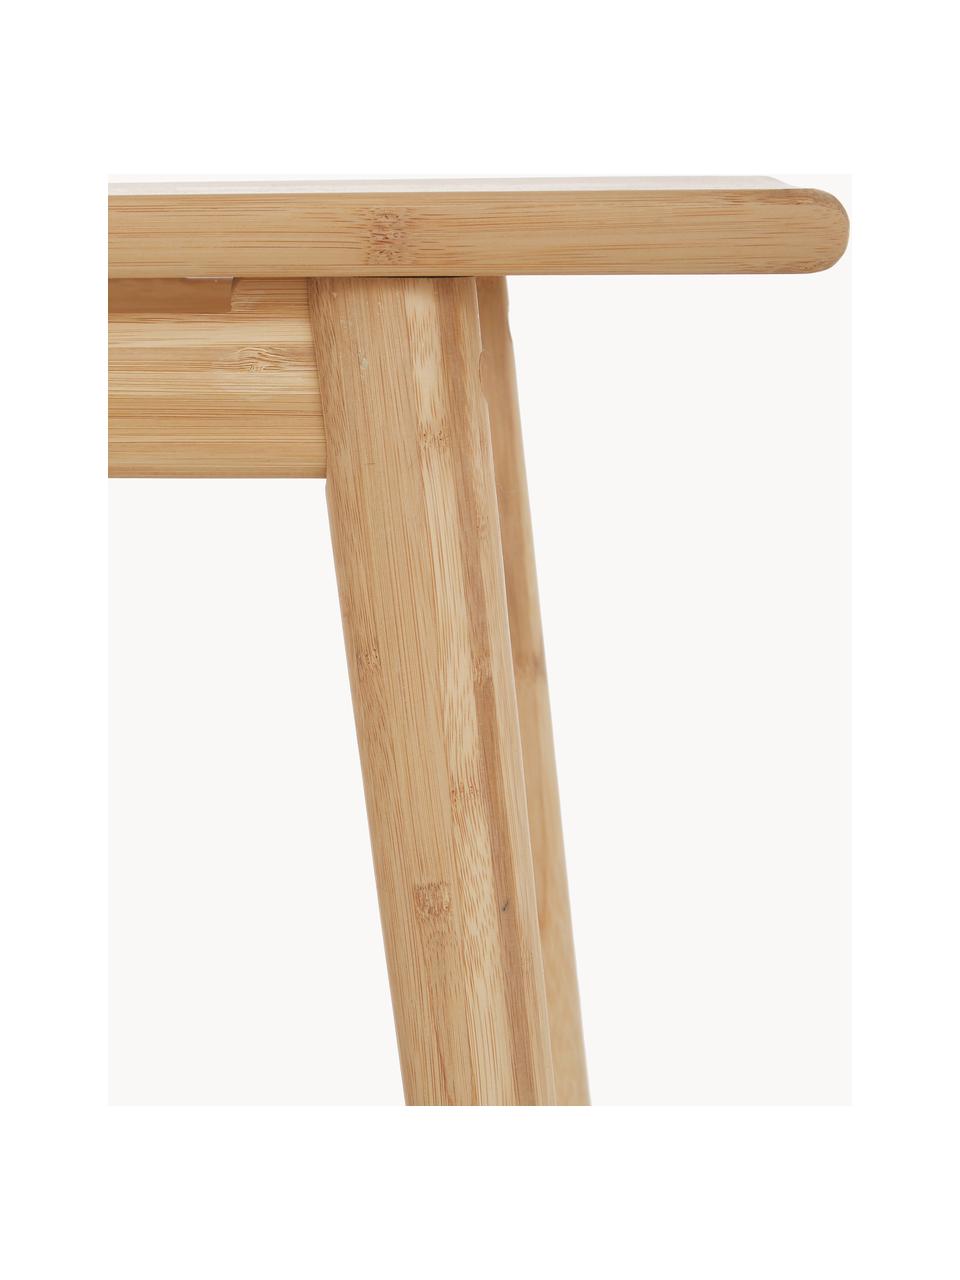 Panchina scarpiera in bambù Noble, Bambù sabbiato e oliato, Marrone chiaro, Larg. 90 x Alt. 45 cm